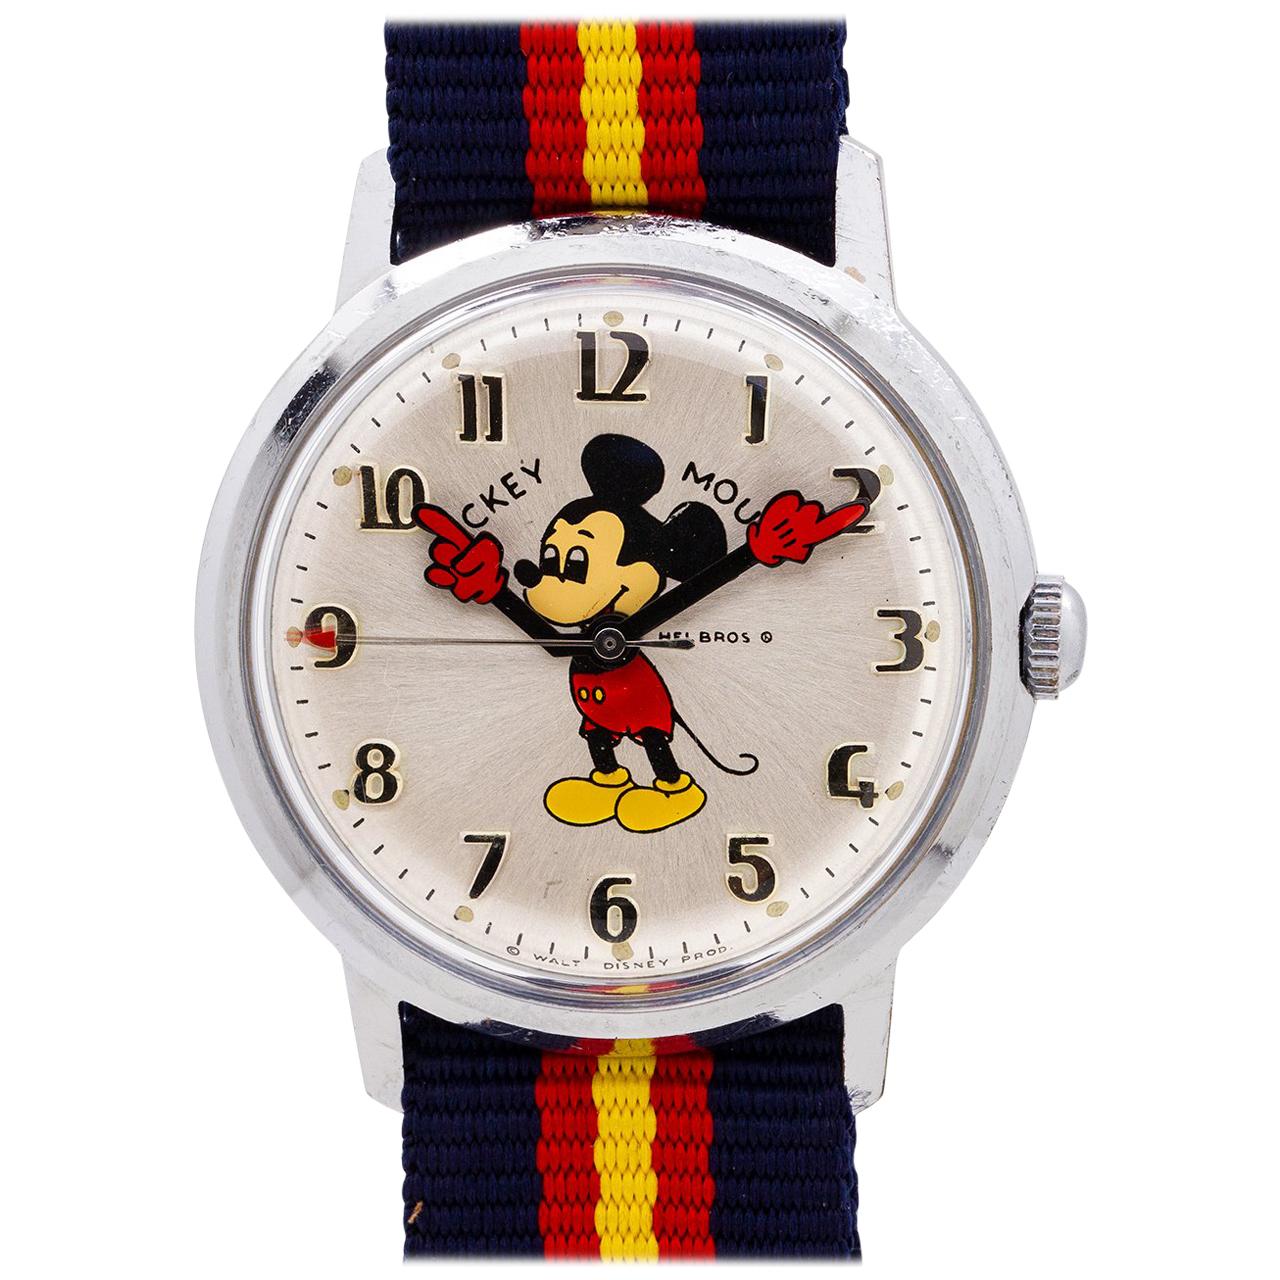 Helbros 17 Jewel Mickey Mouse Watch, circa 1970s